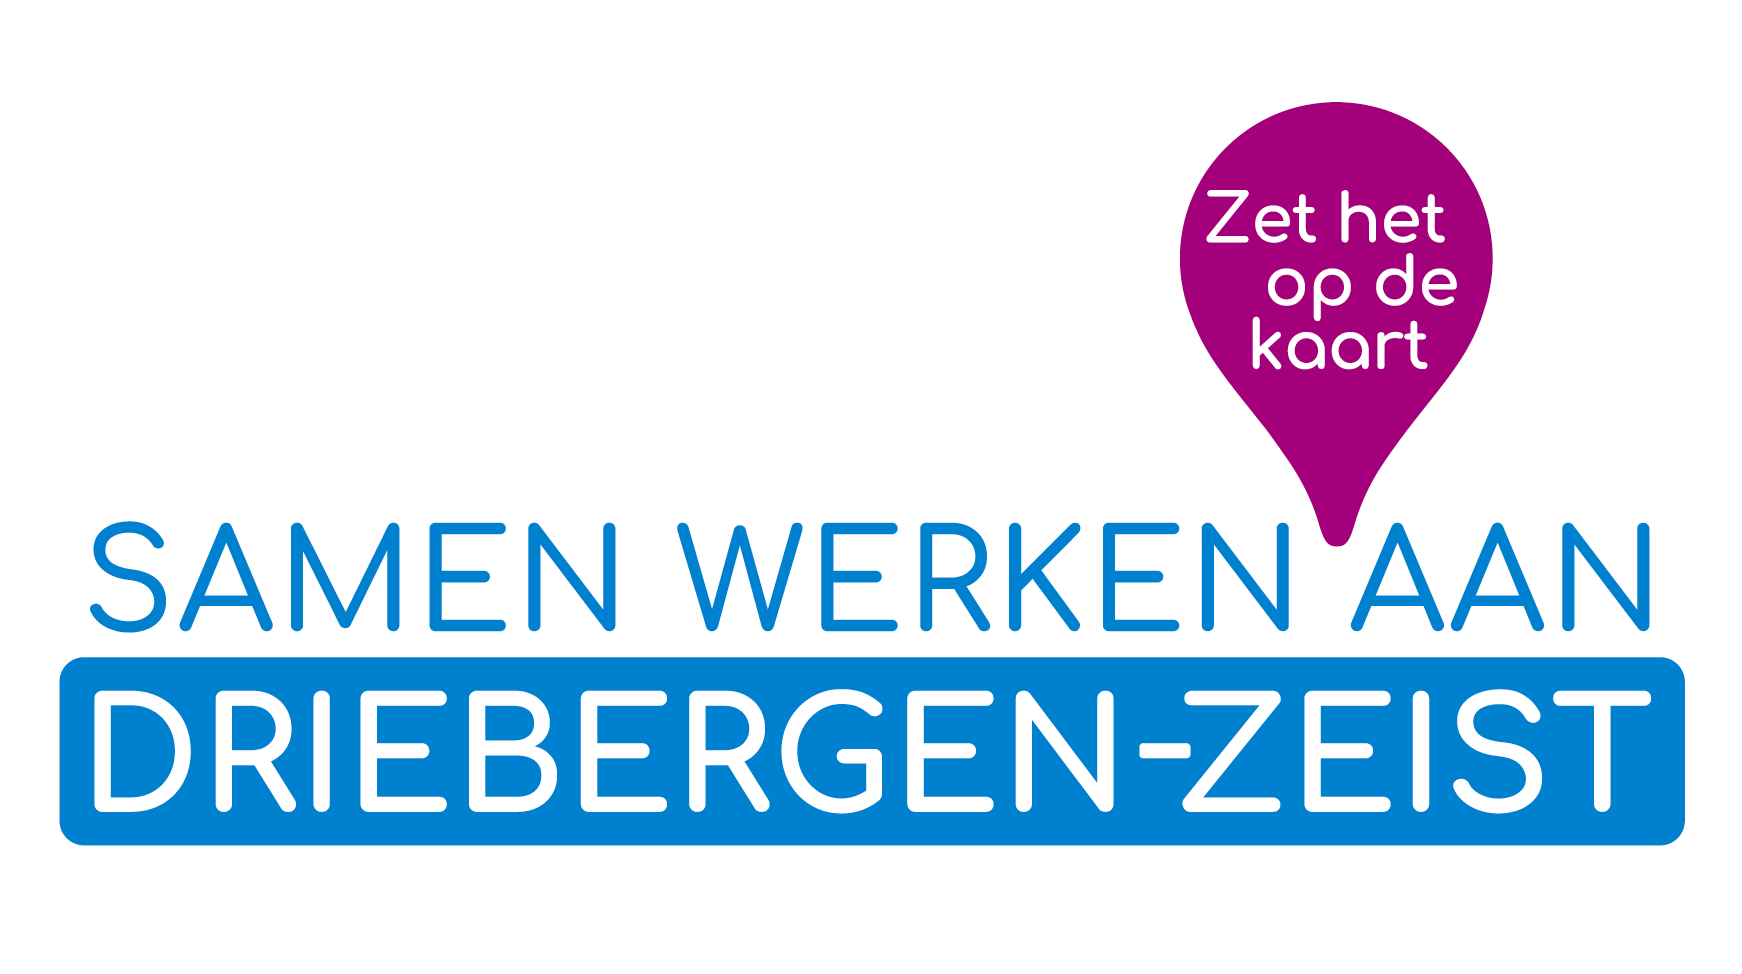 Stationsgebied Driebergen-Zeist logo